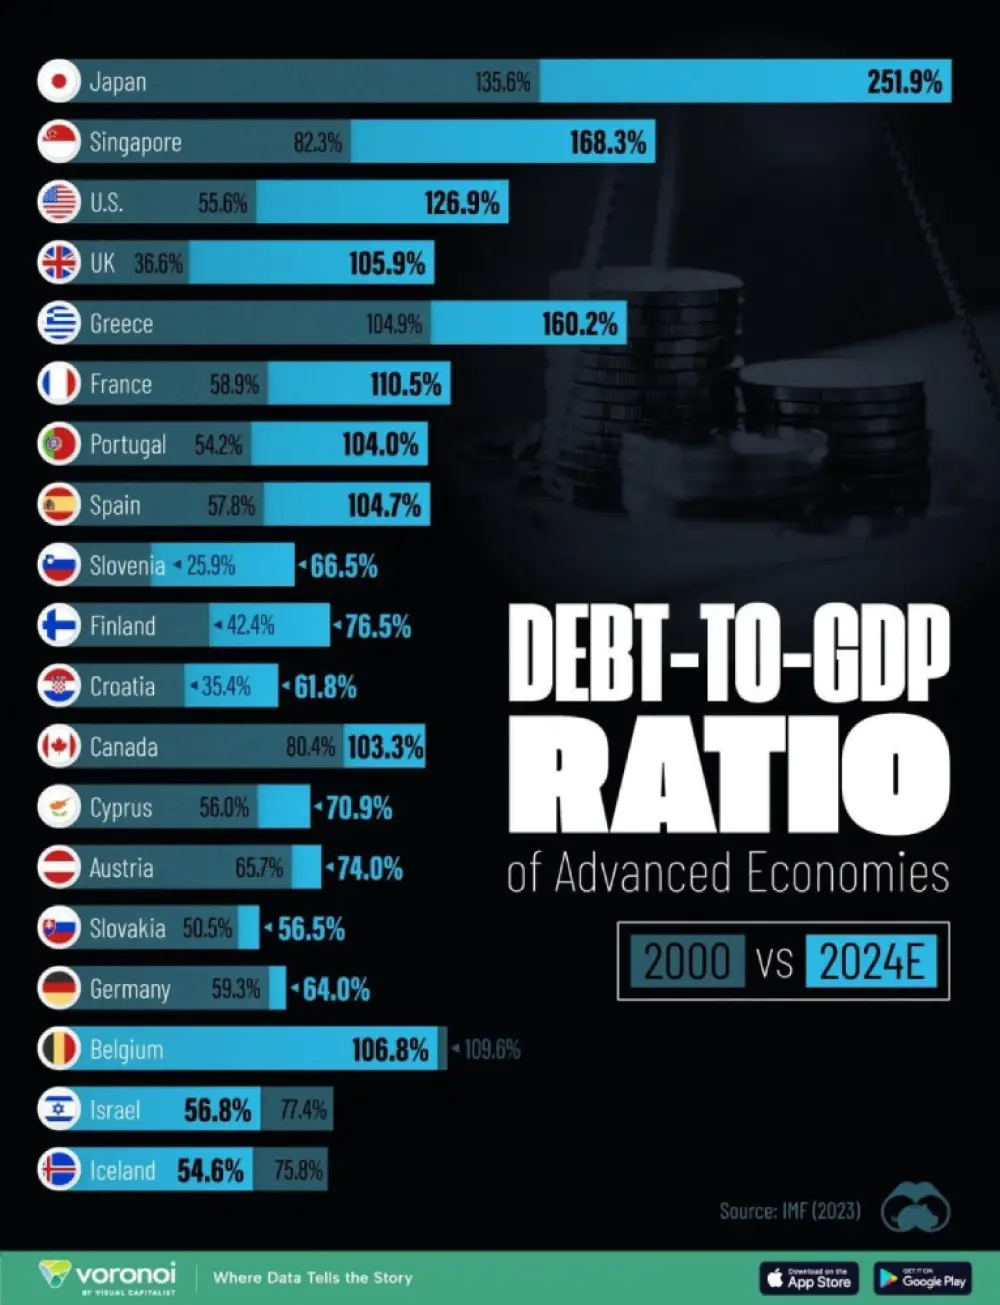 Debt-to-GDP ratios